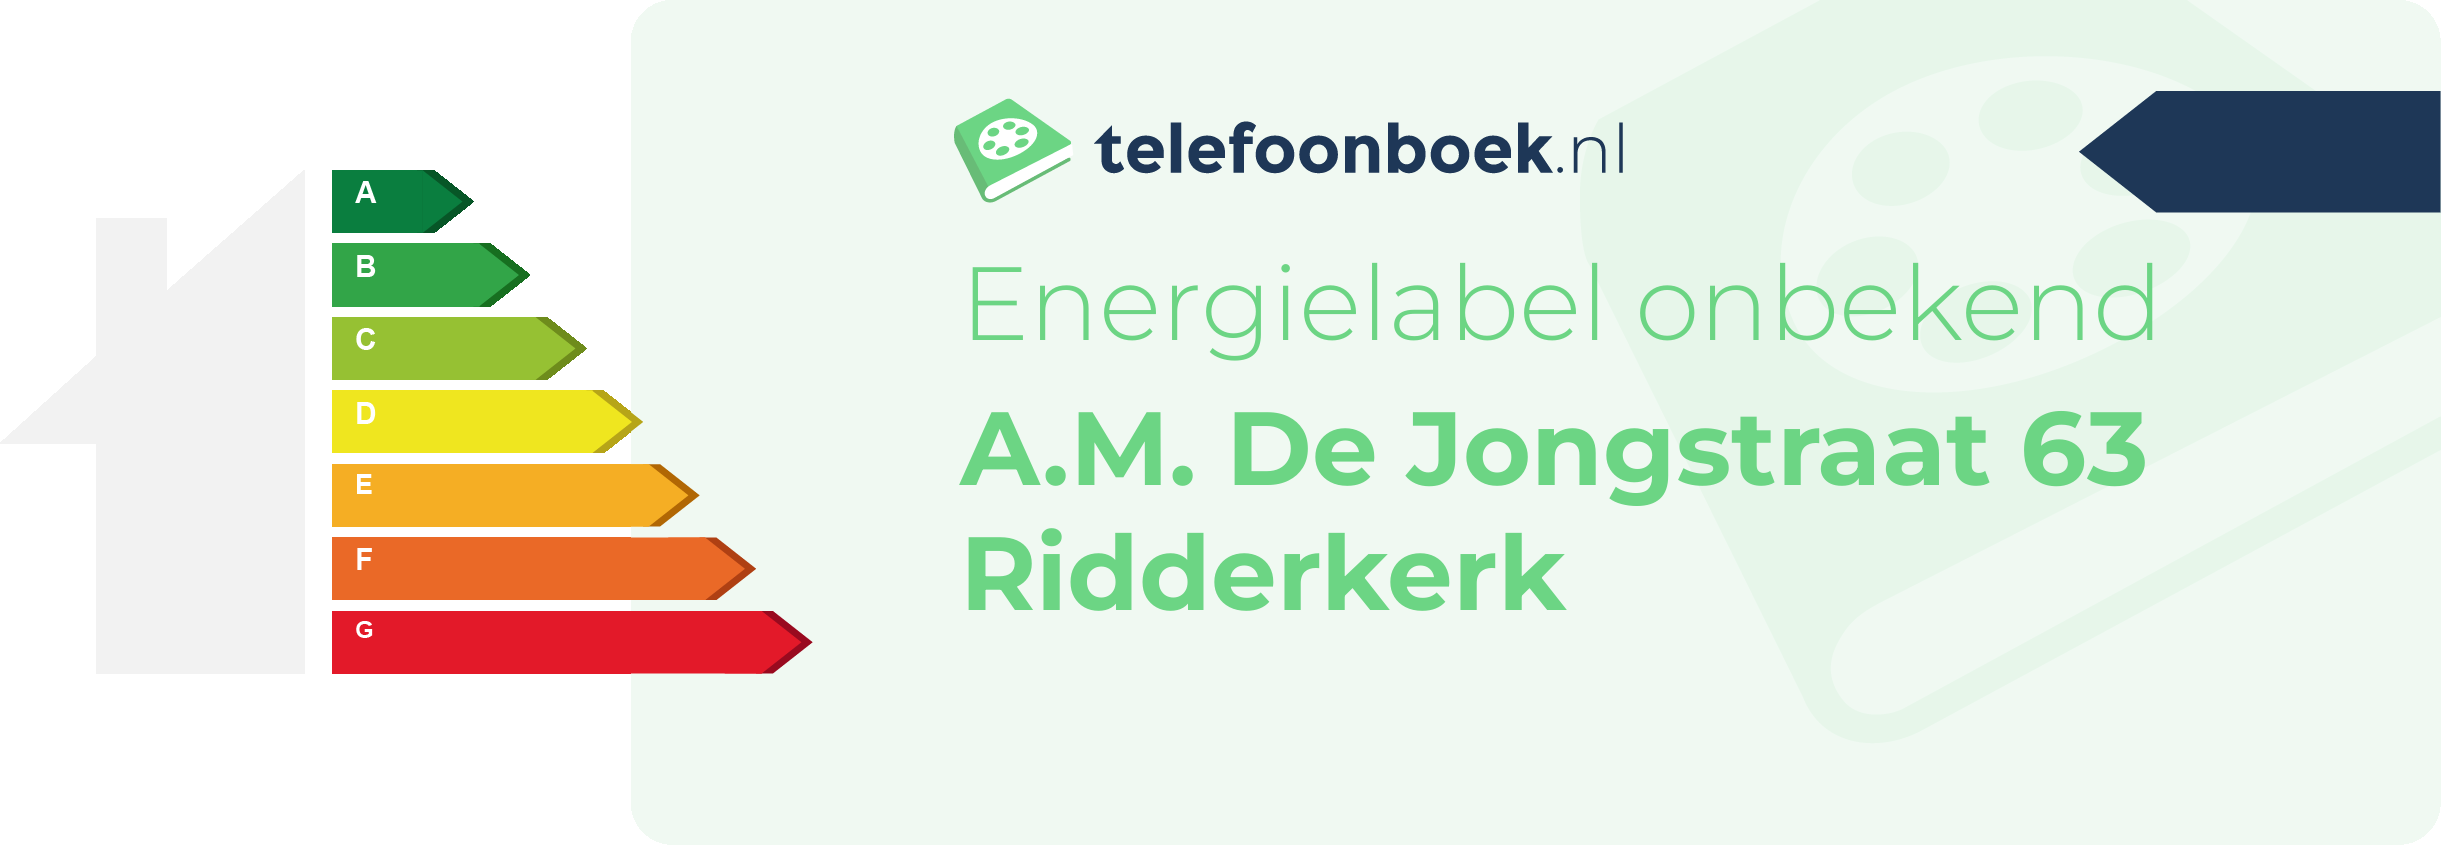 Energielabel A.M. De Jongstraat 63 Ridderkerk